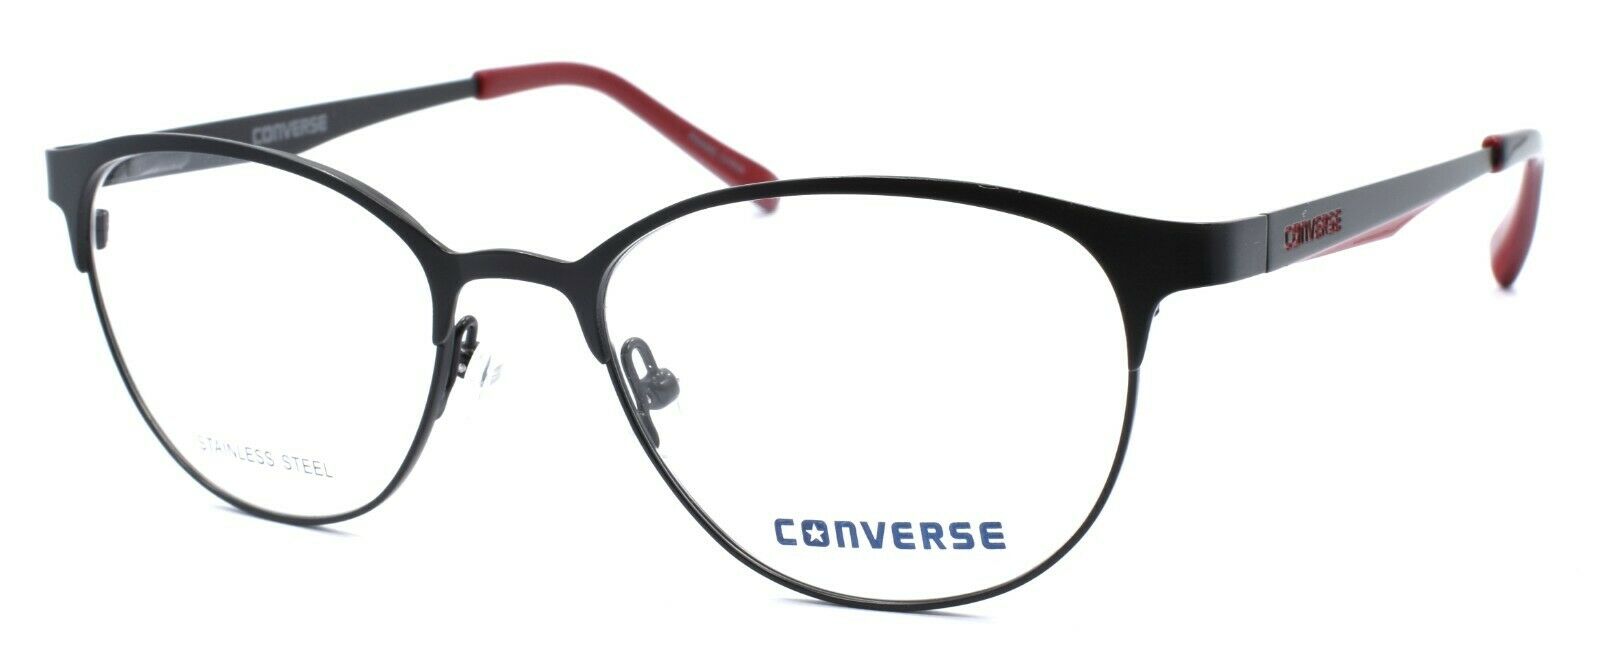 1-CONVERSE G149 Eyeglasses Frames 49-17-140 Black + CASE-751286303001-IKSpecs